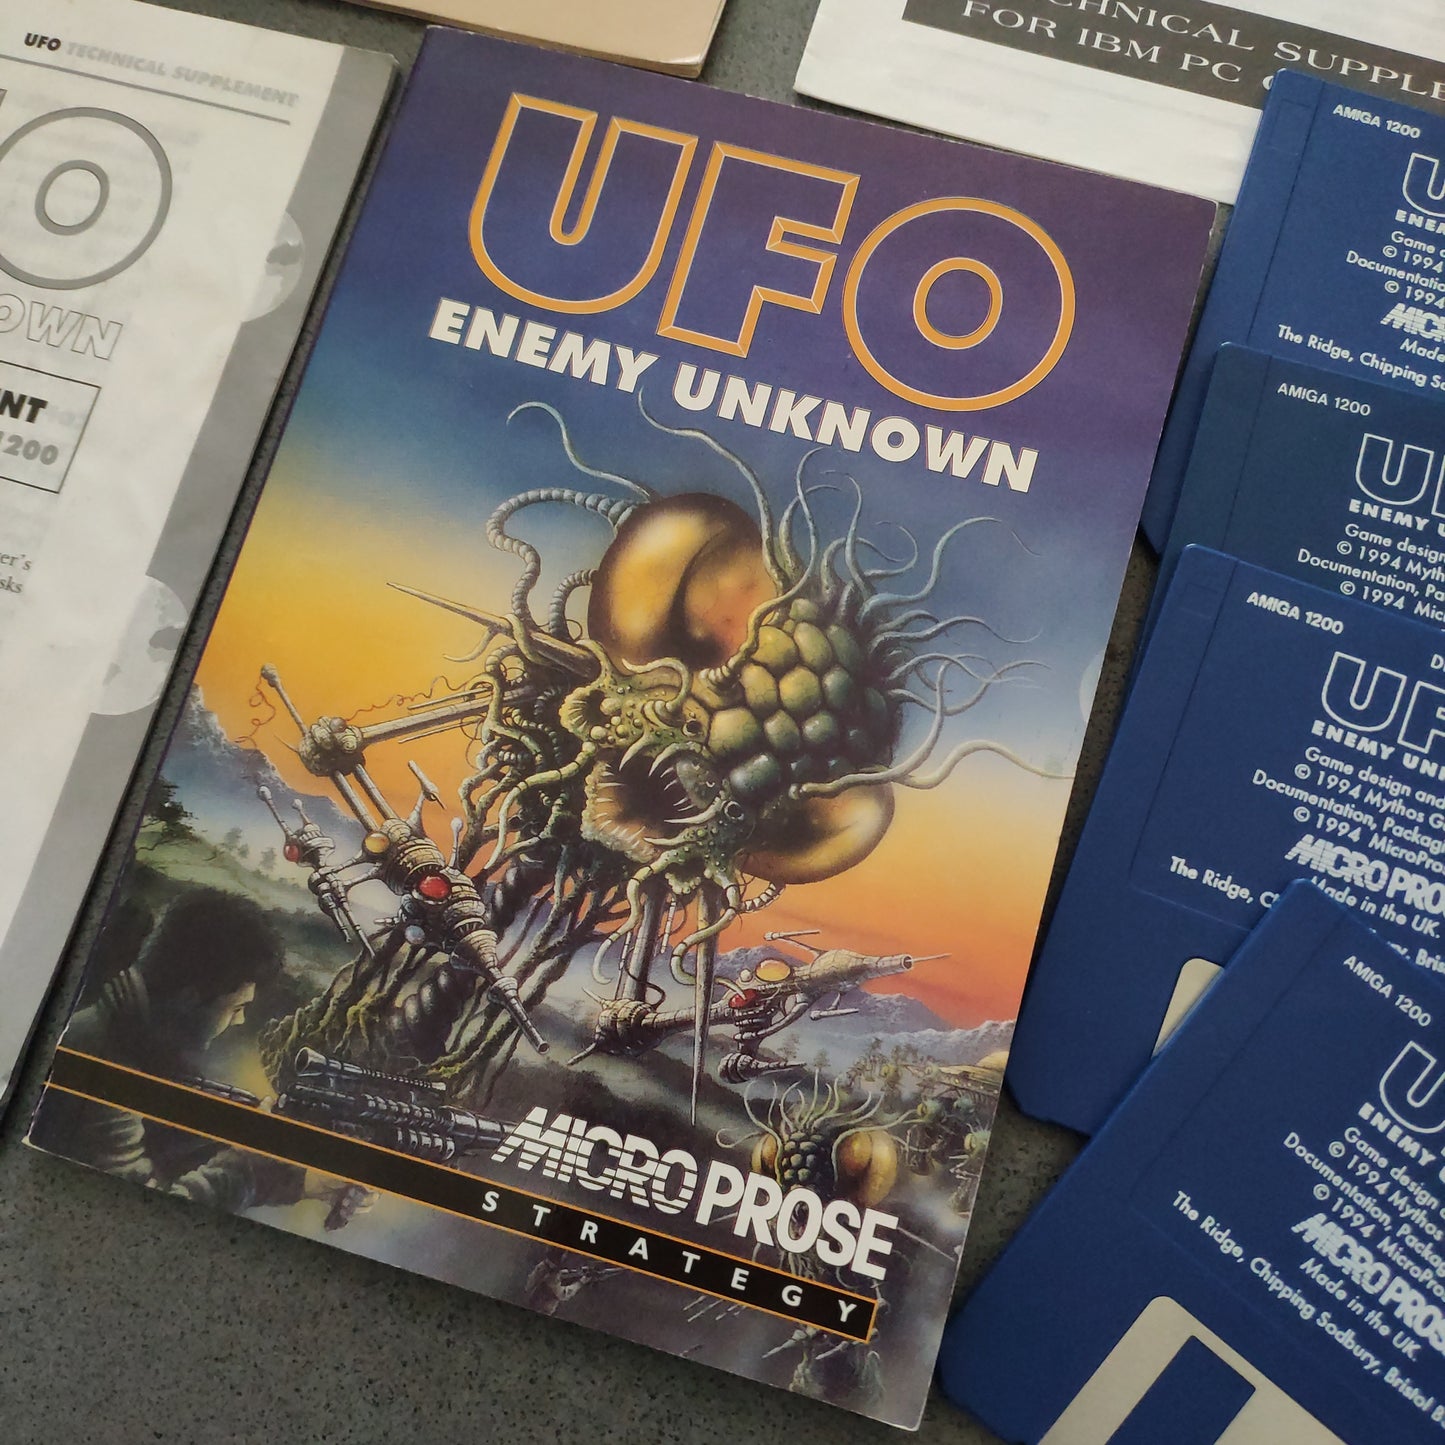 UFO Enemy Unknown Amiga 1200